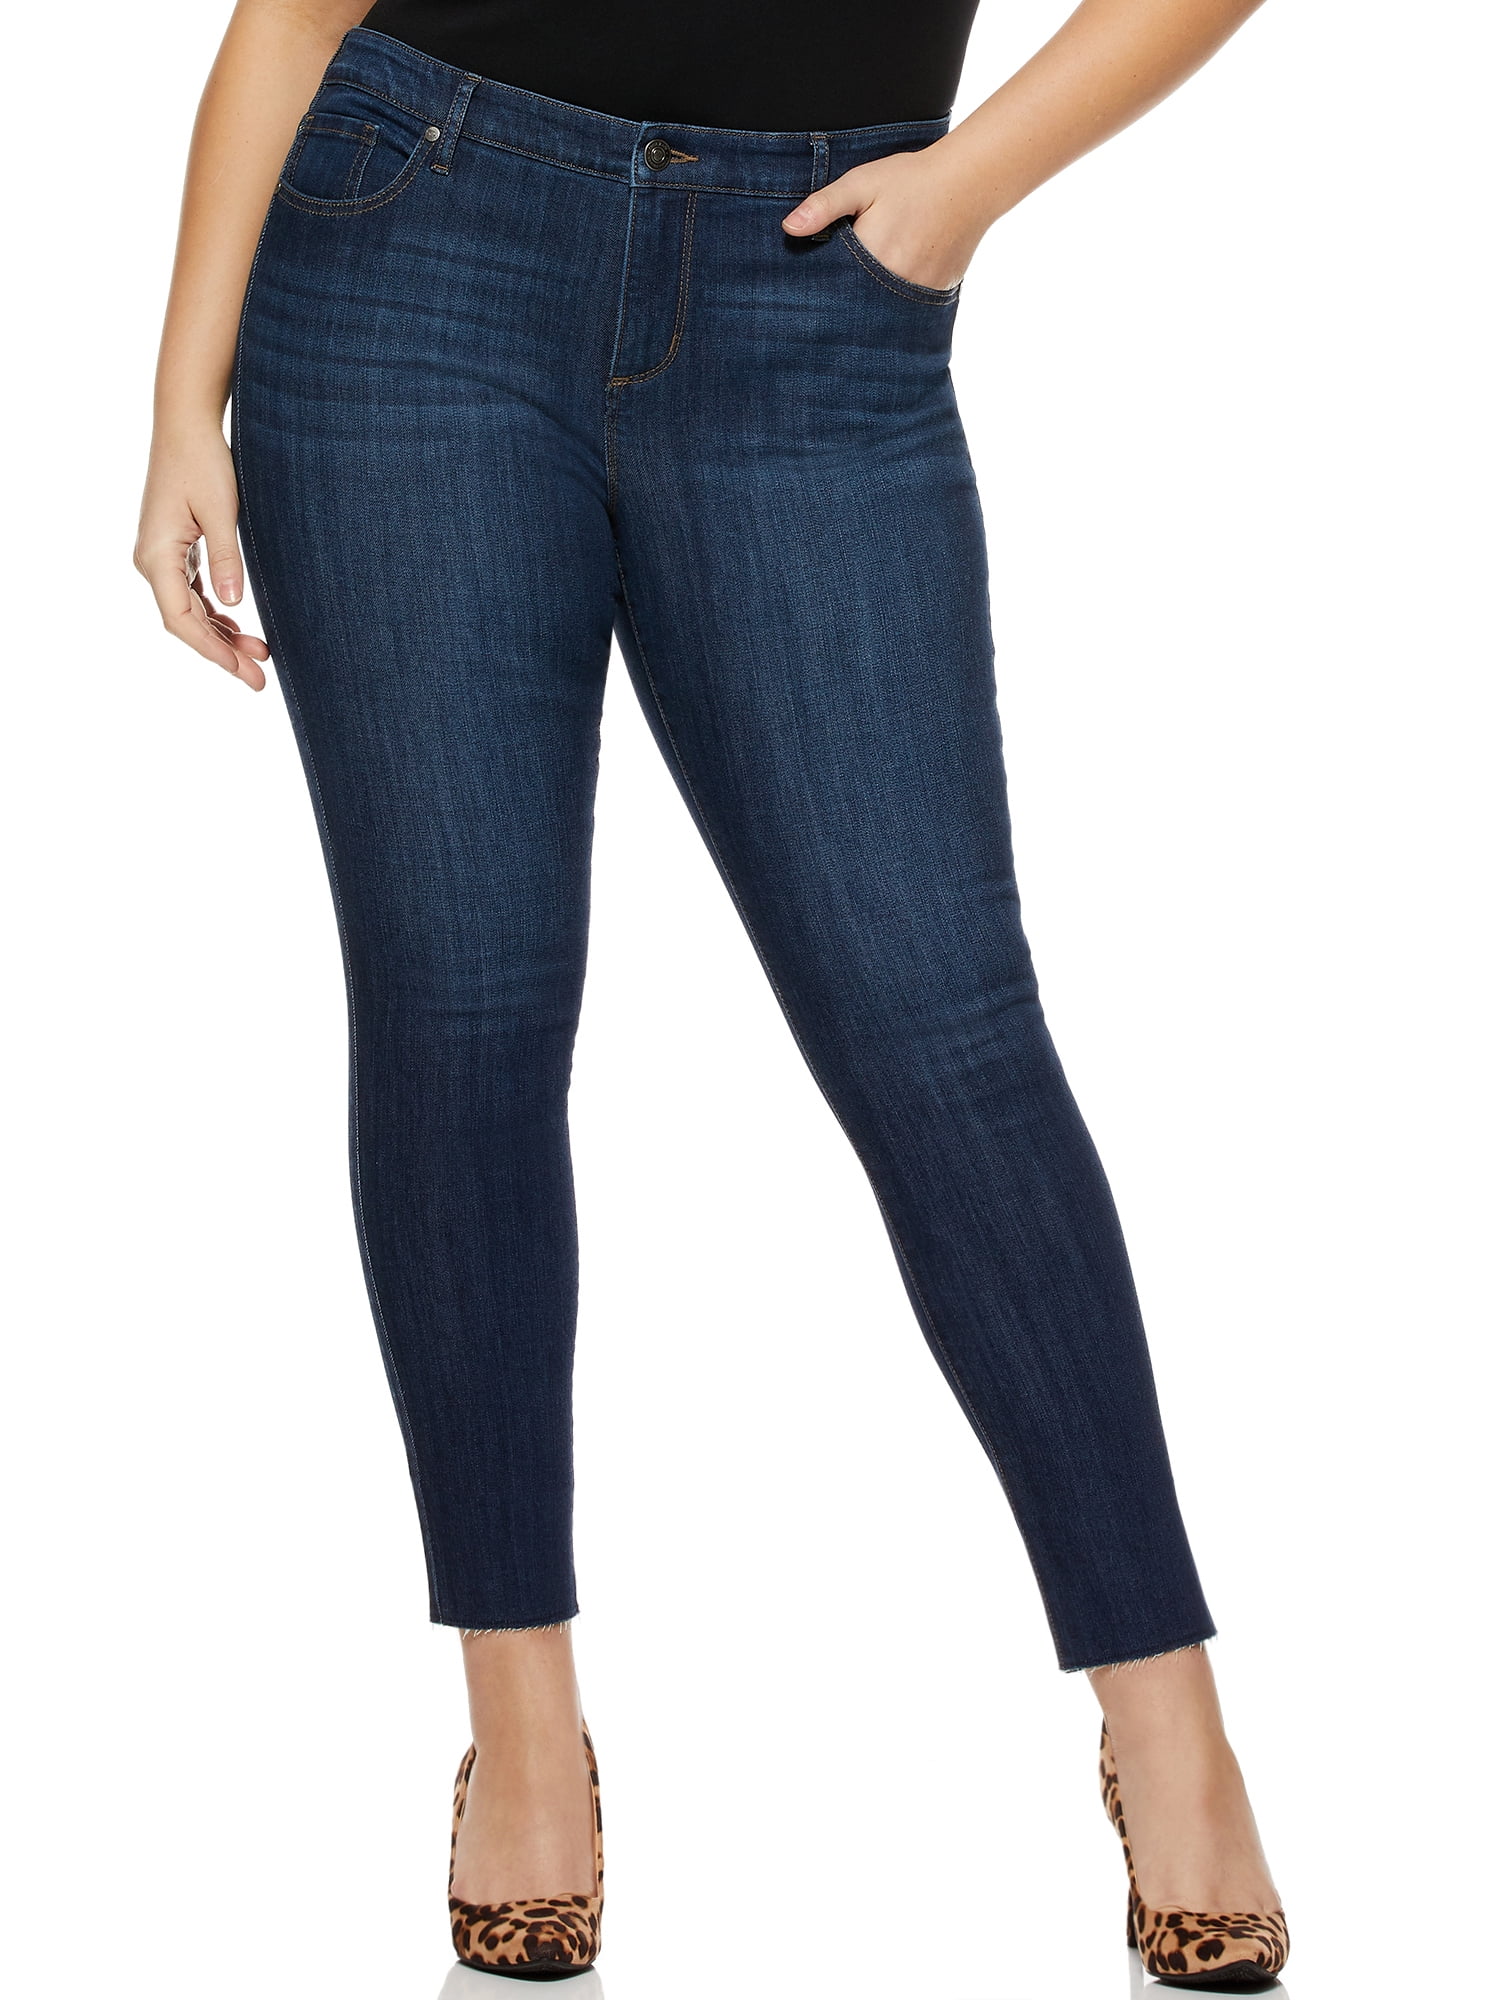 Sofia Jeans Women's Plus Size Curvy Skinny Mid-Rise Stretch Ankle Jeans ...